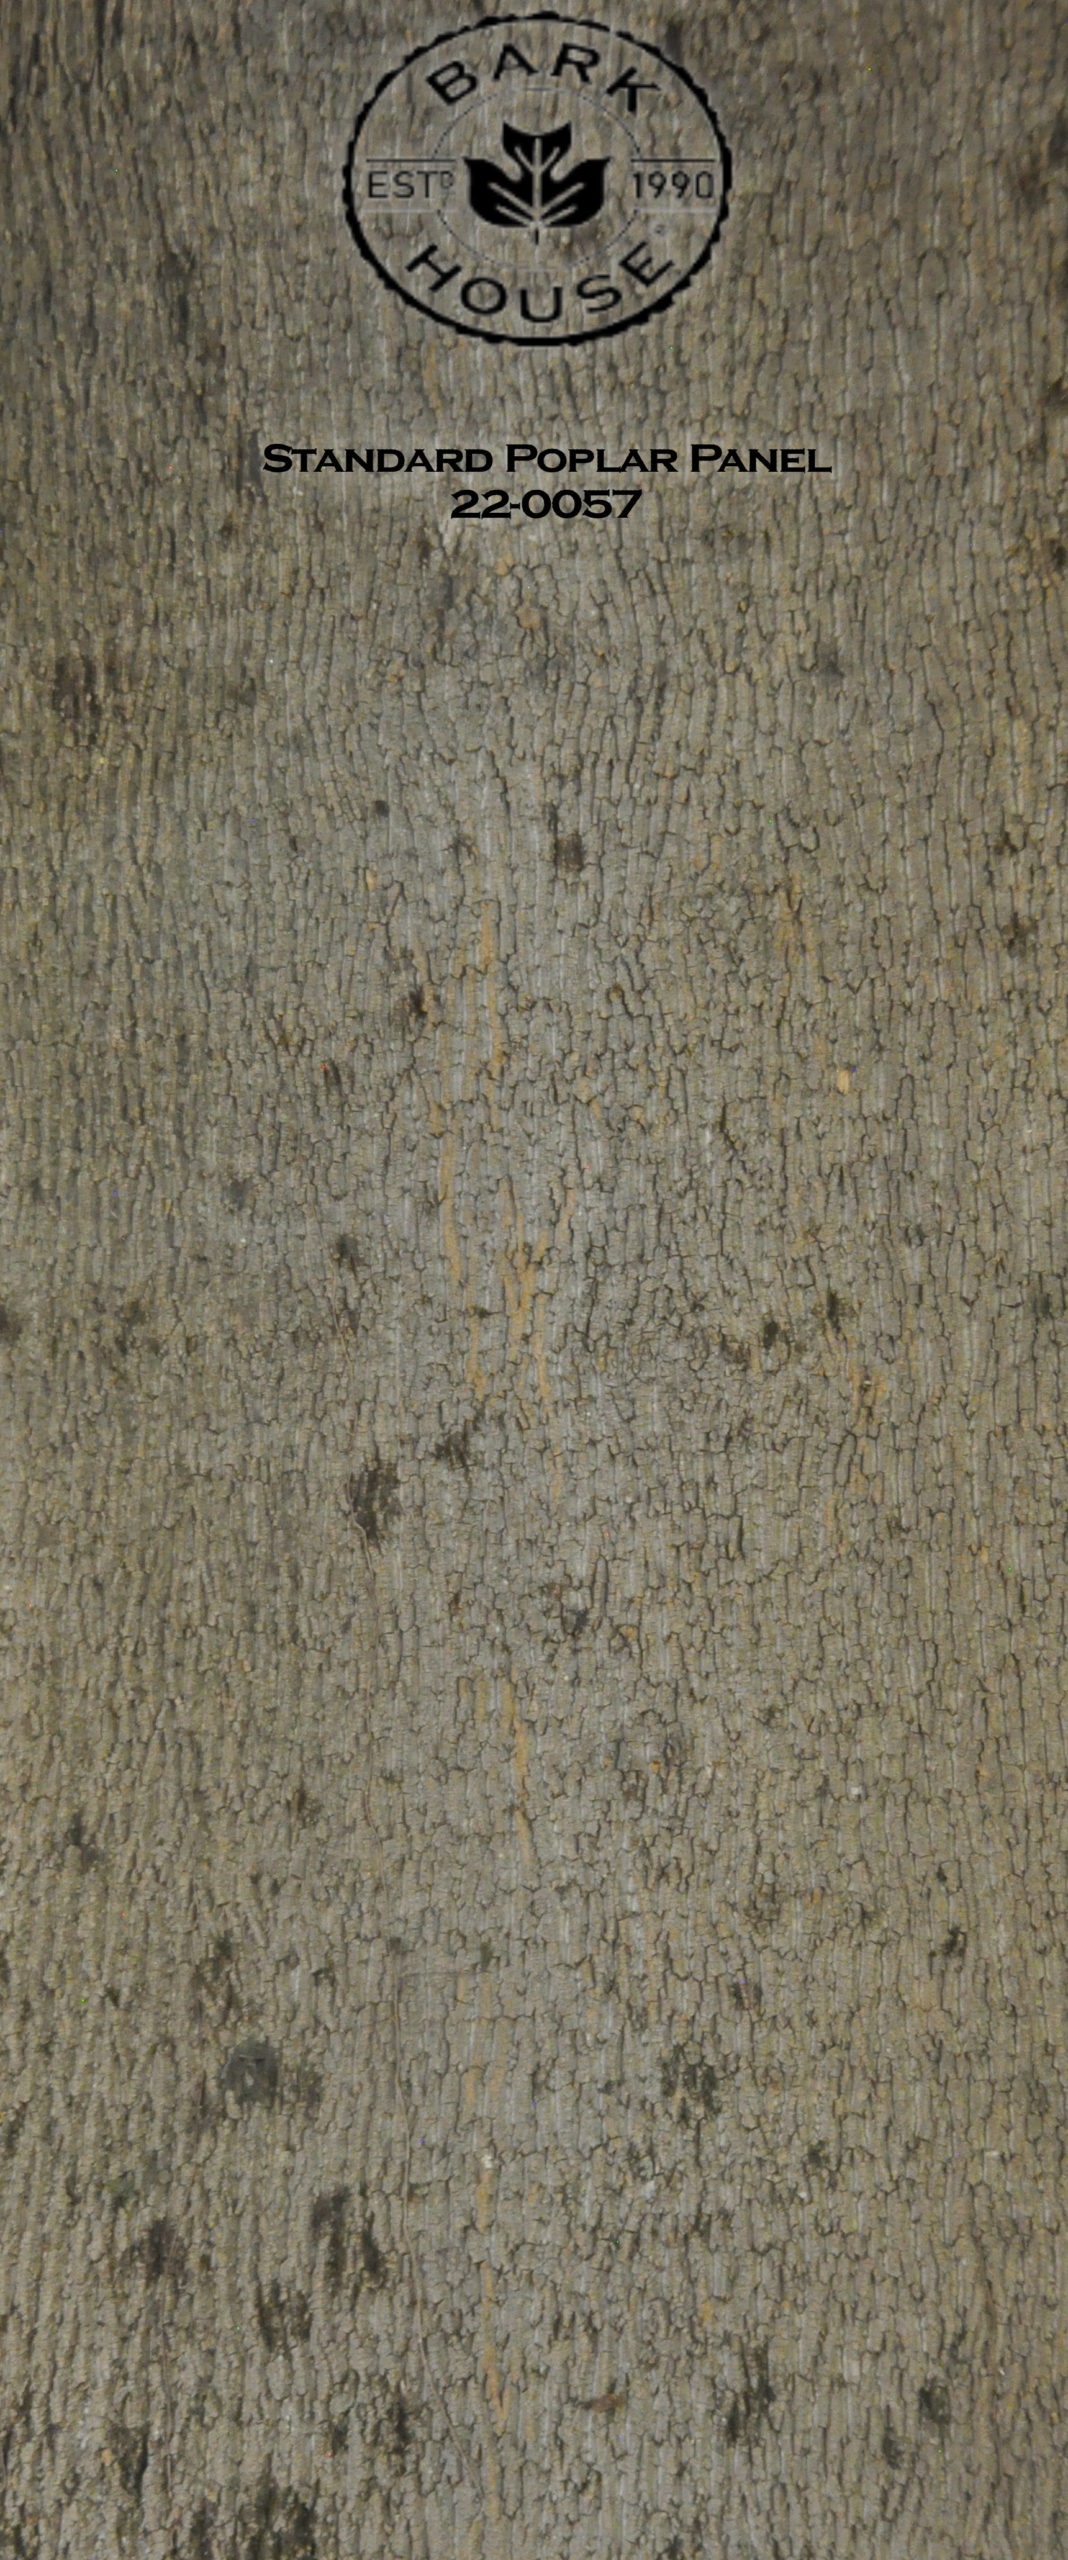 Bark House poplar bark panel SKU POPP-STD-22-0057